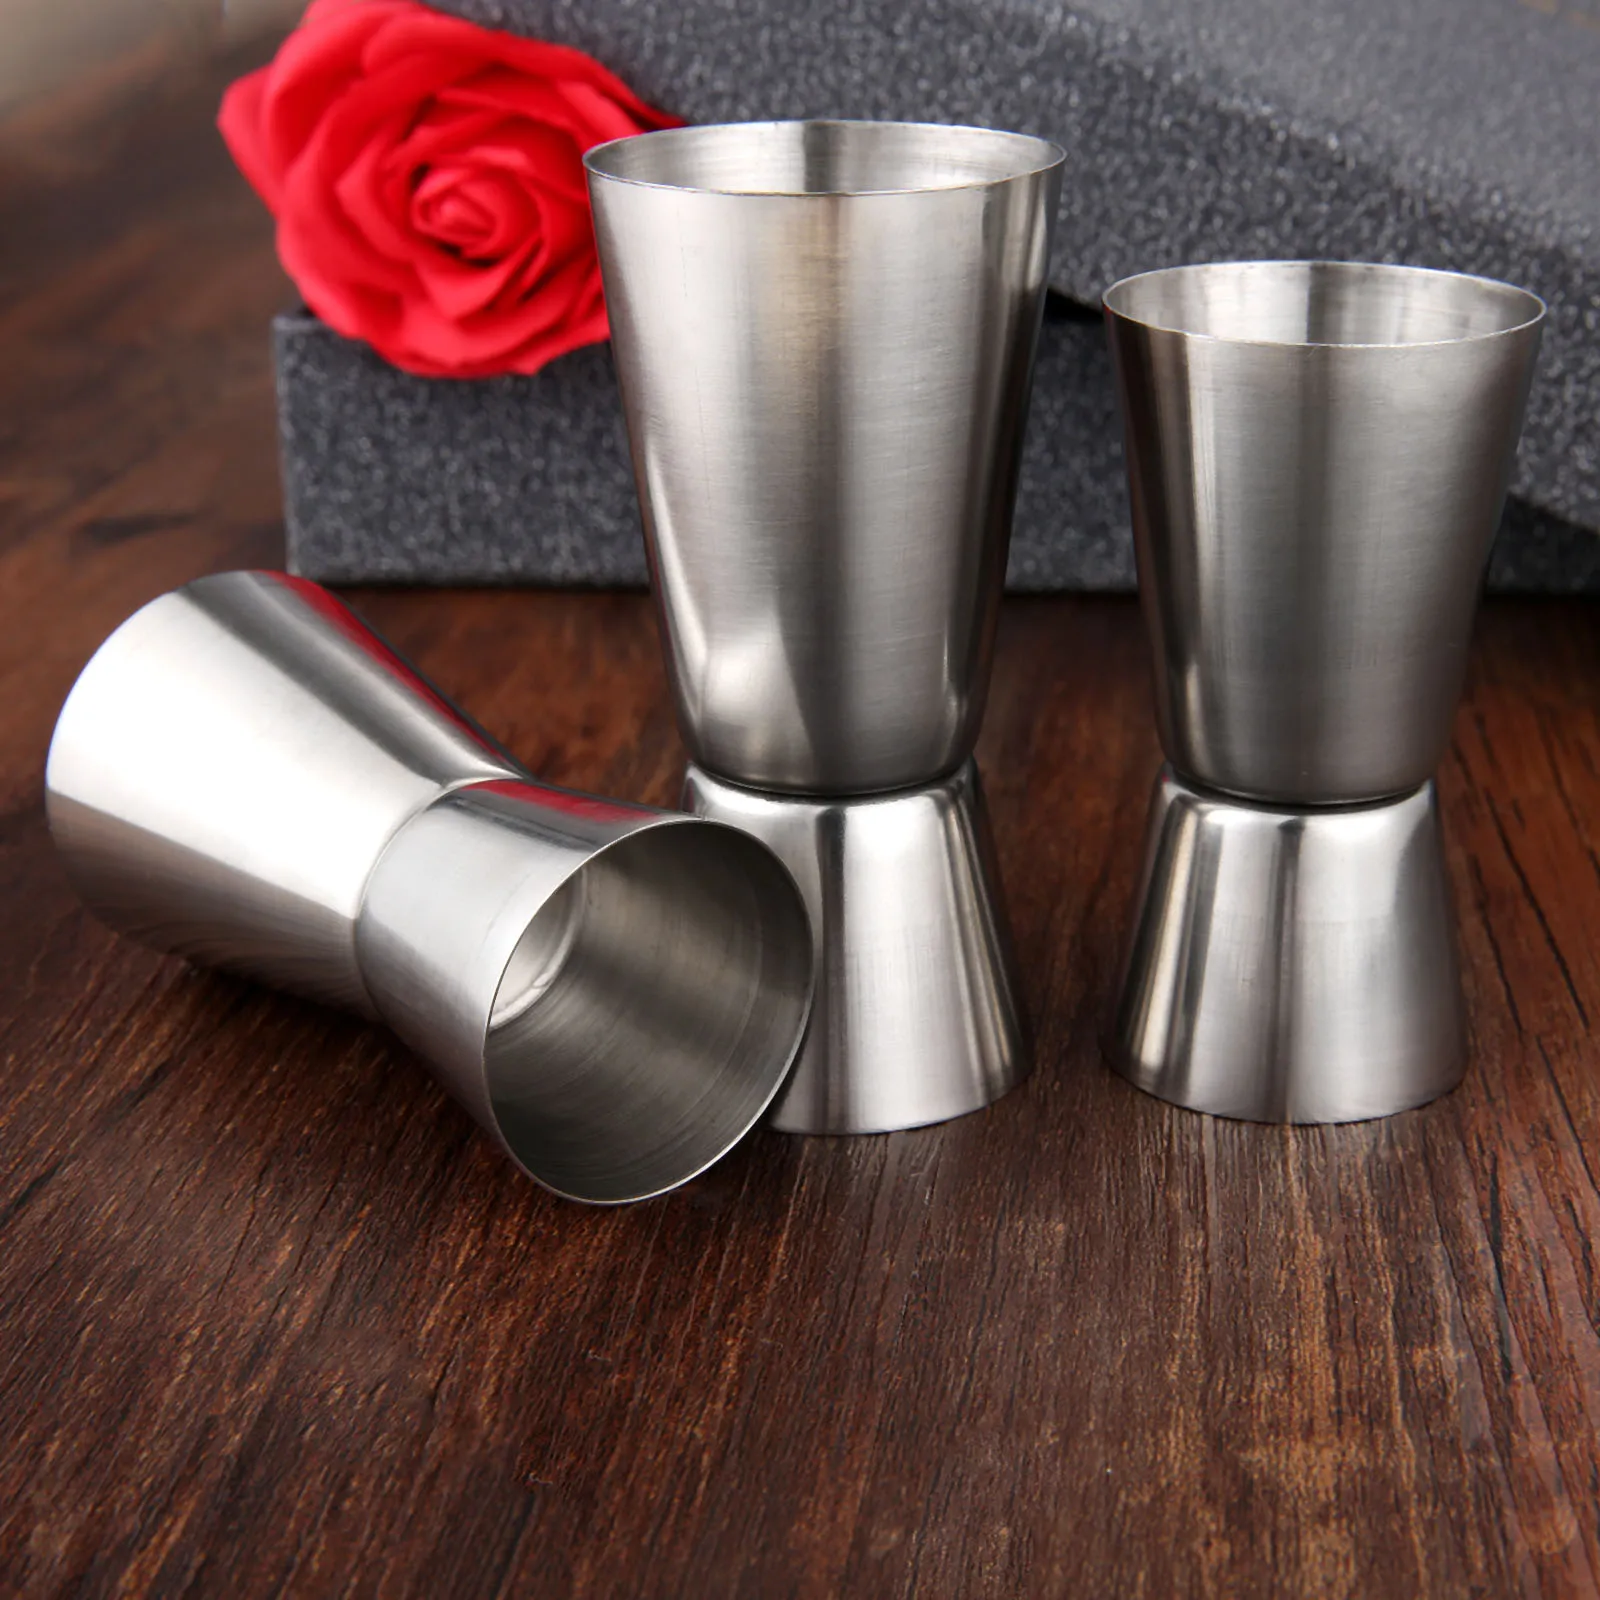 

15-50ml New Dual Shot Stainless Steel Measure Cup Cocktail Shaker Drink Spirit Measure Jigger Kitchen Bar Barware Tools